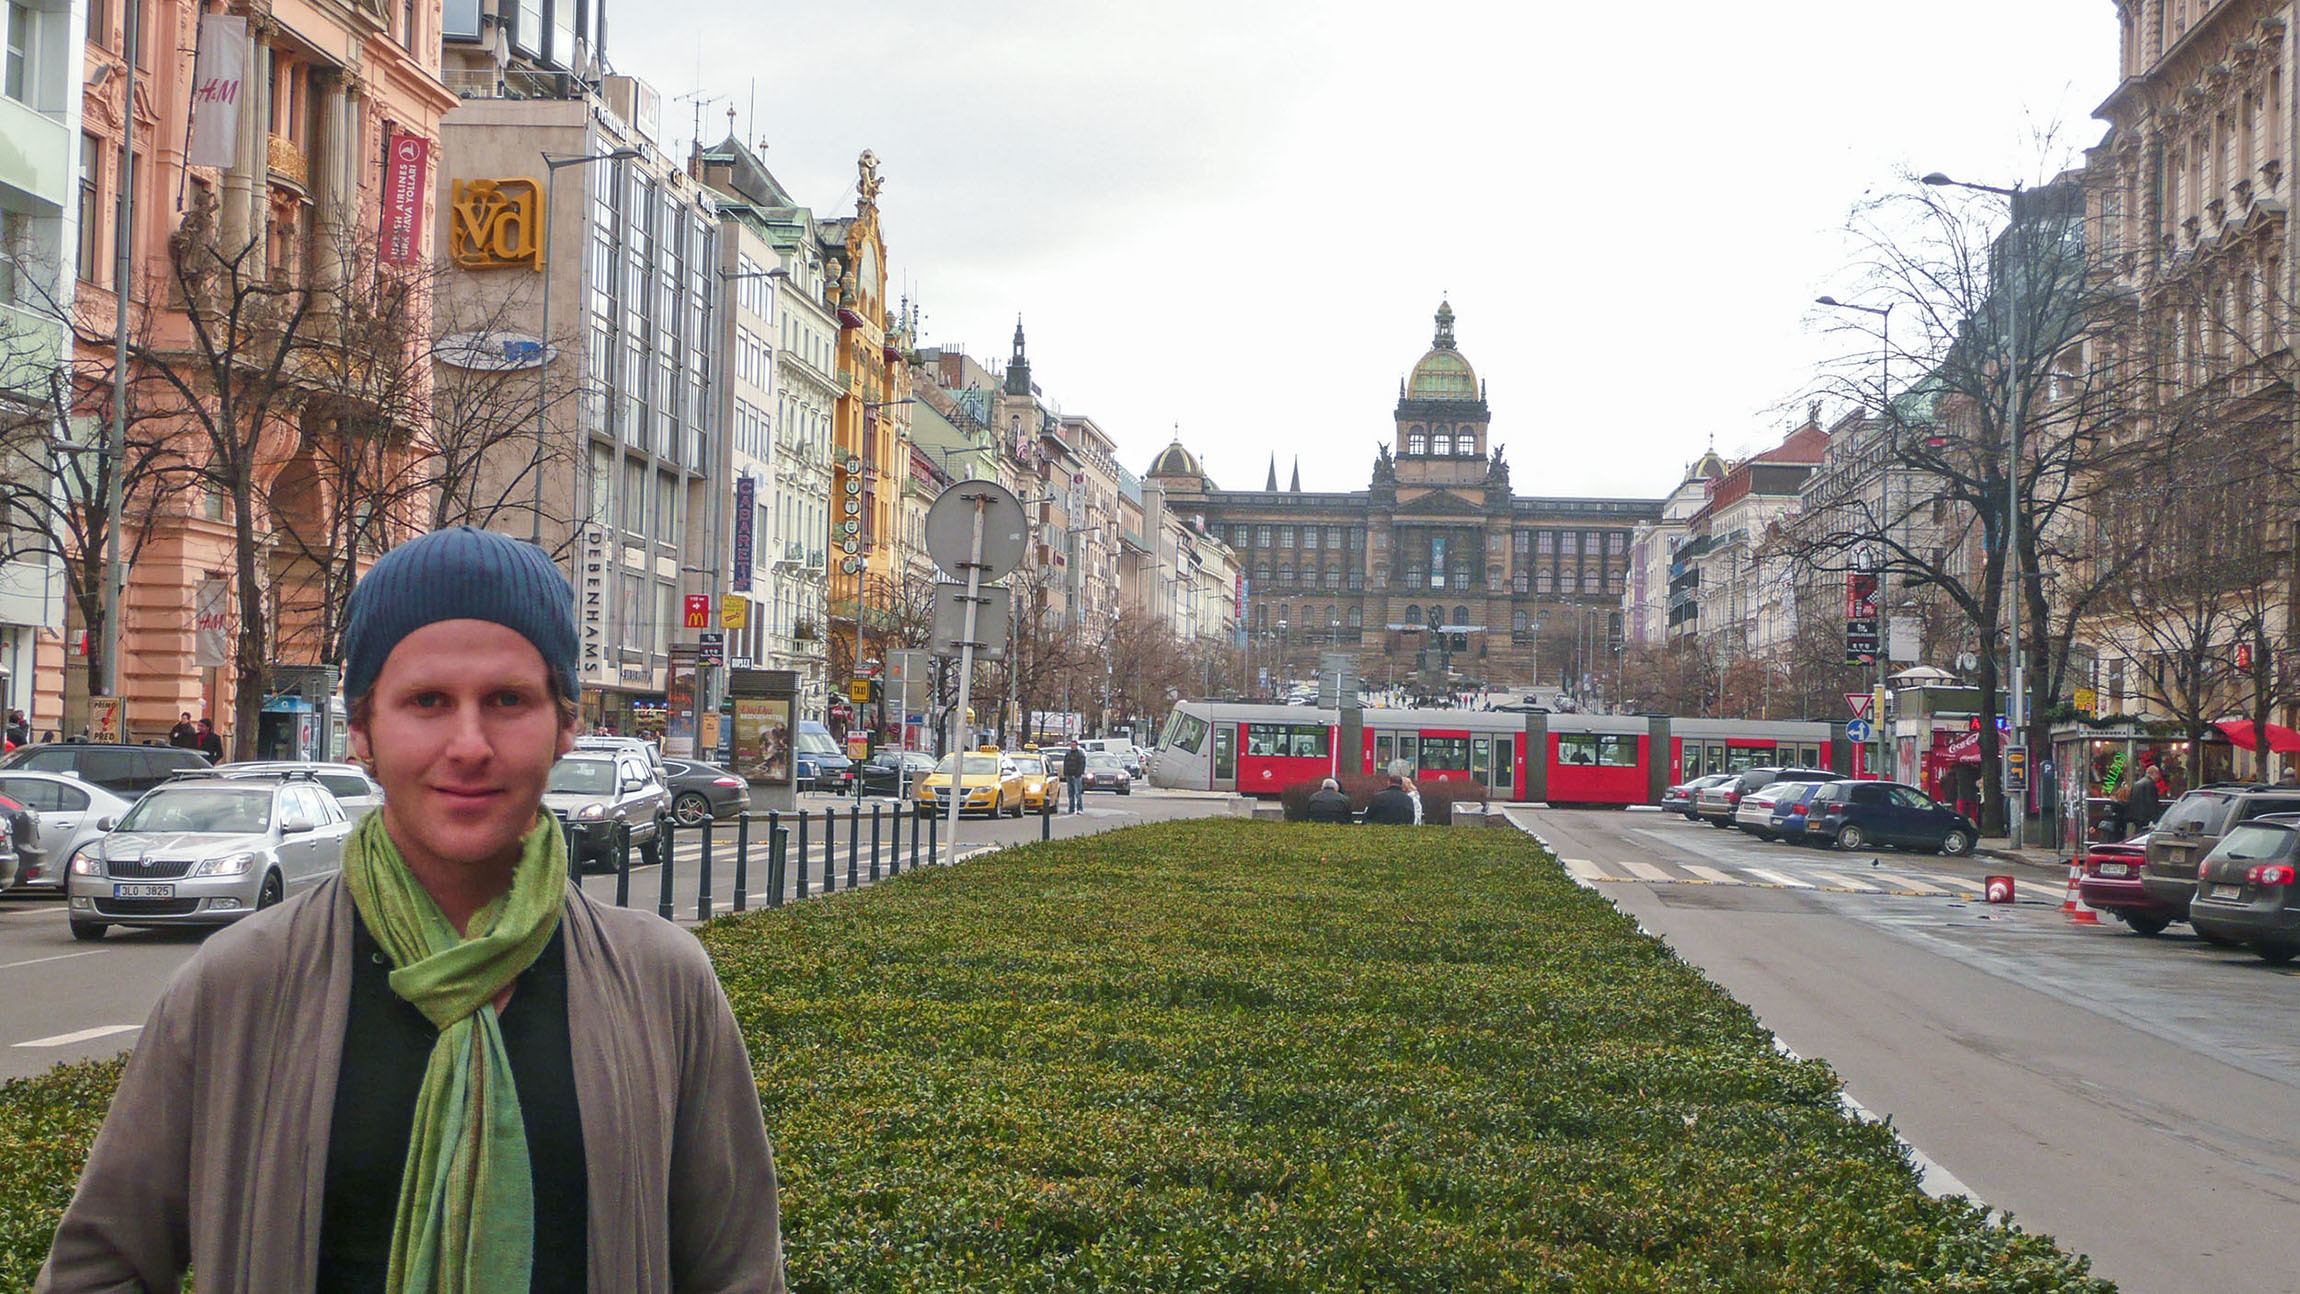 Wenceslas Square in Prague Czech Republic